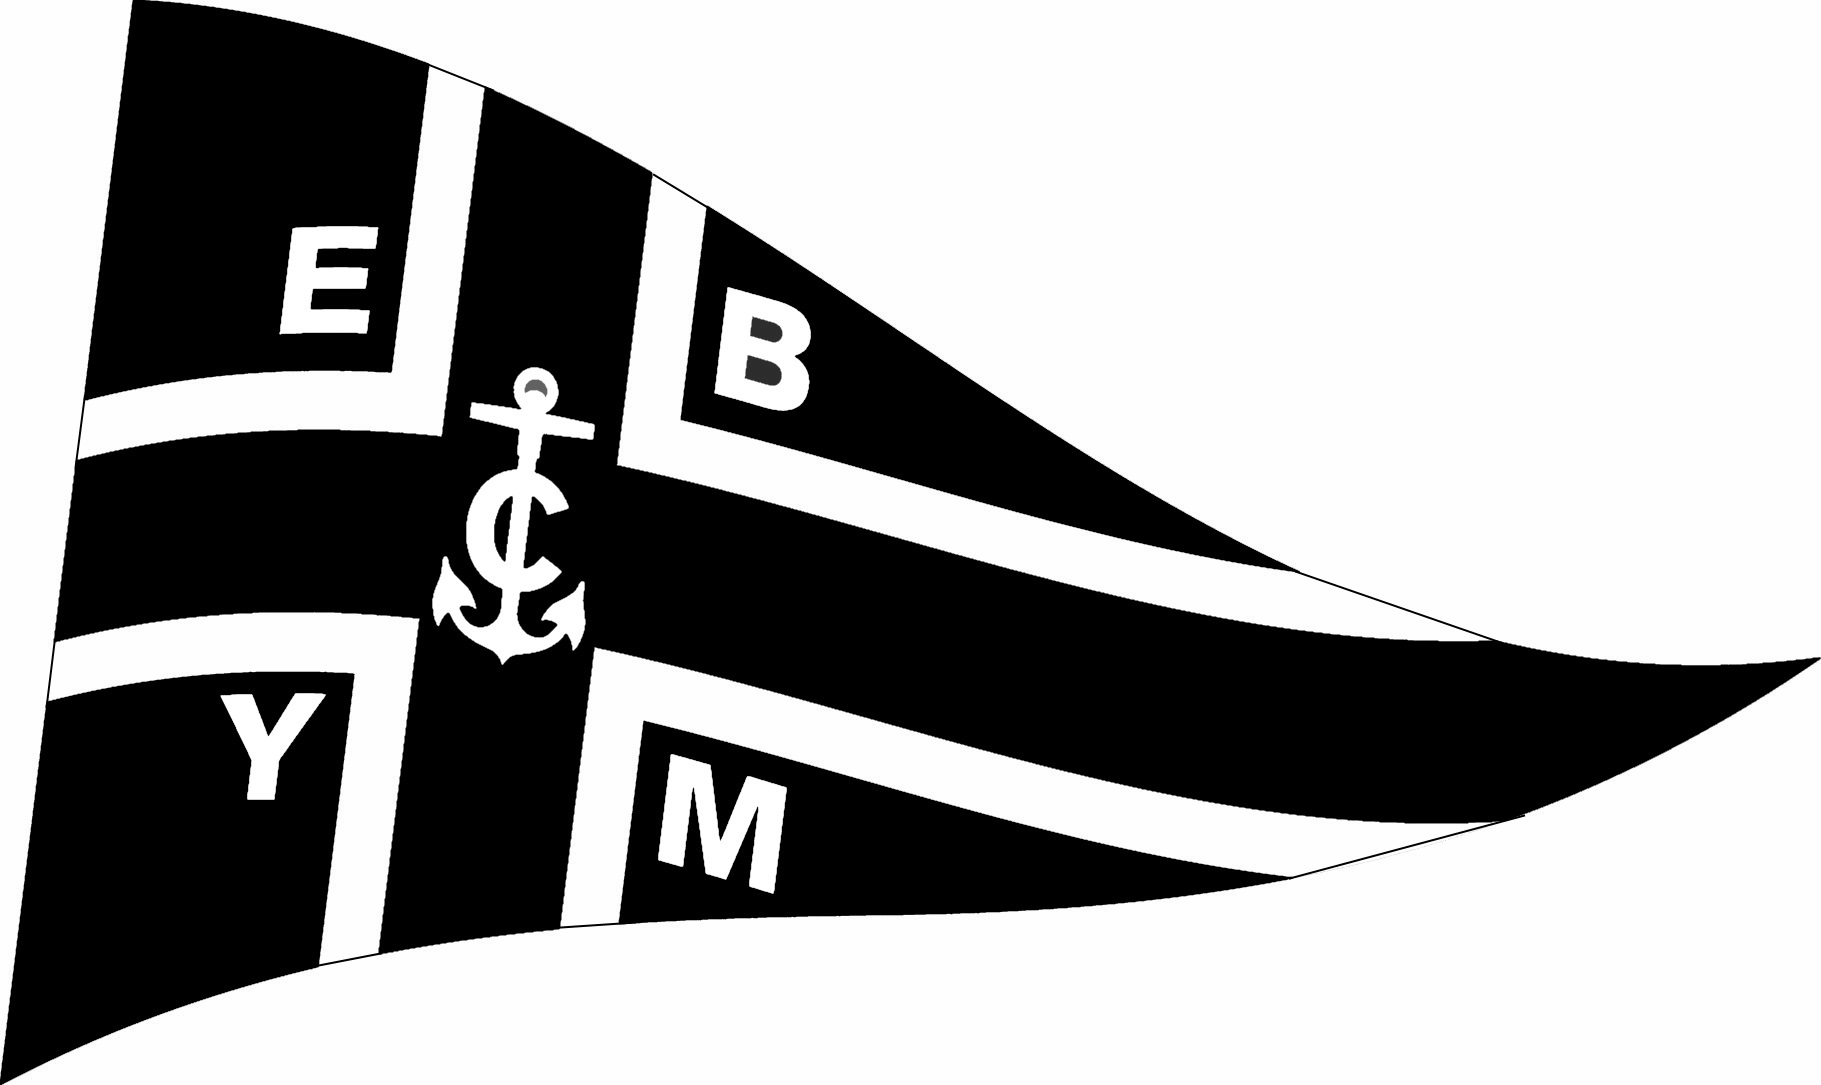 Evans Bay Yacht & Motor Boat Club logo